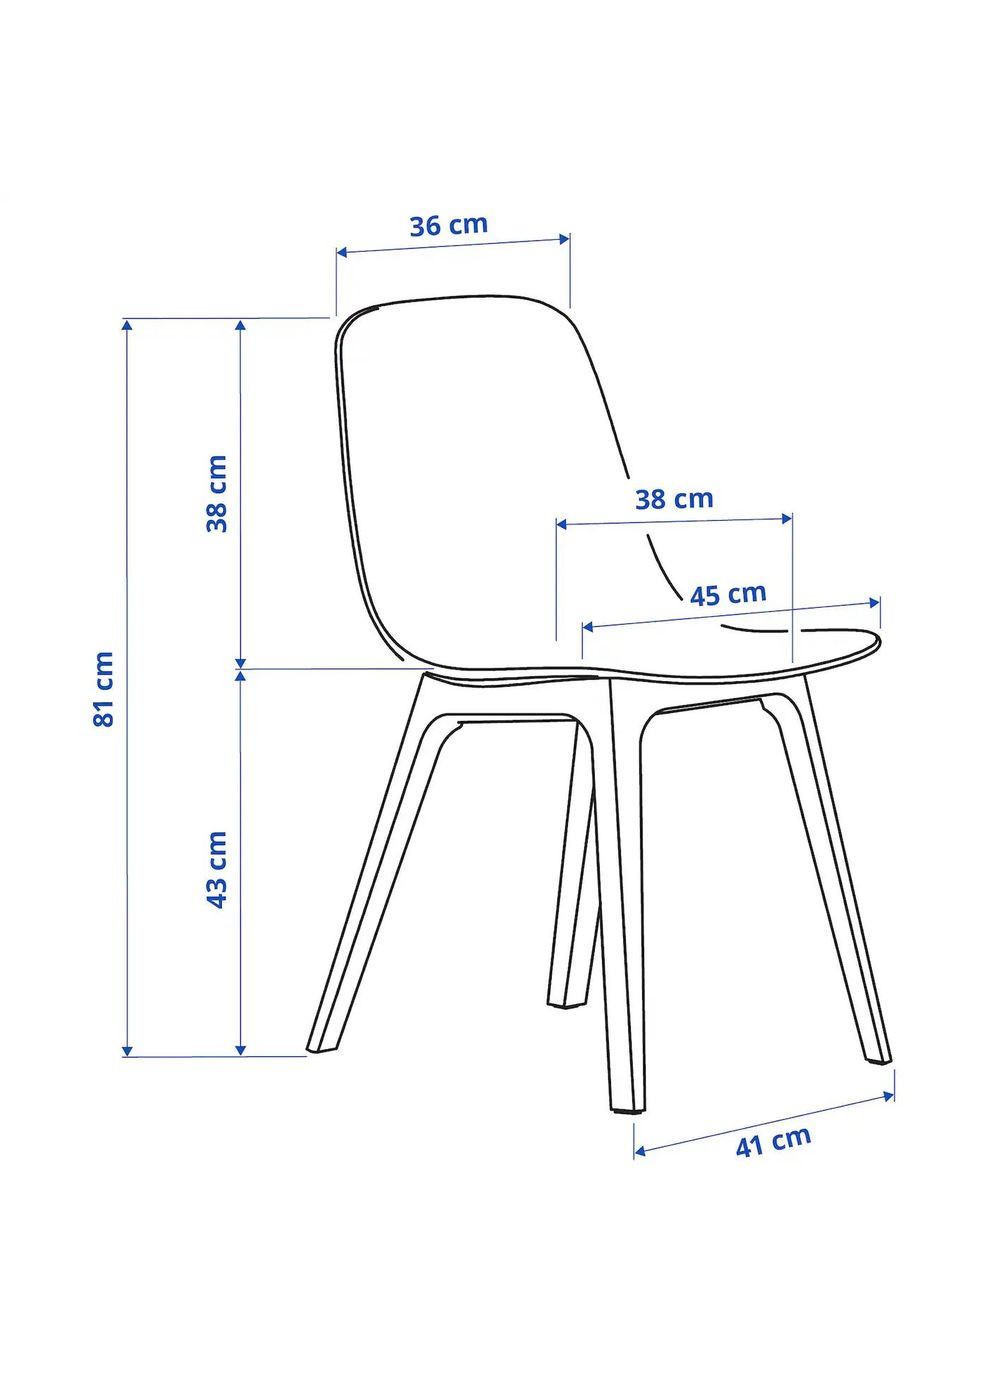 Стіл і 4 стільці ІКЕА LISABO / ODGER 140х78 см (s09259702) IKEA (278406703)